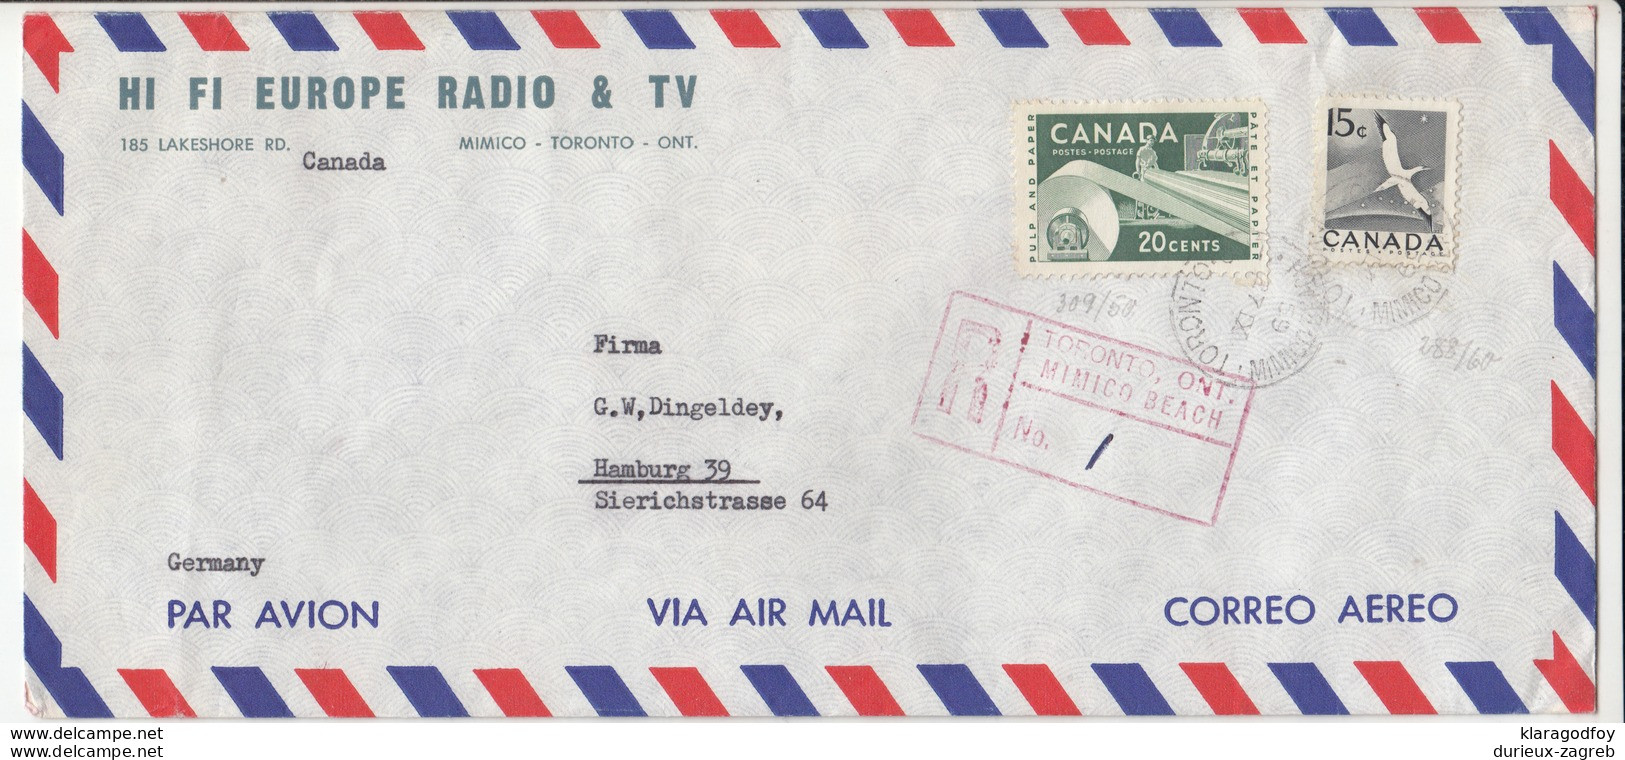 Canada, Hi Fi Europe Radio & TV Airmail Letter Cover Registered Travelled 1965 Toronto Pmk B180205 - Storia Postale